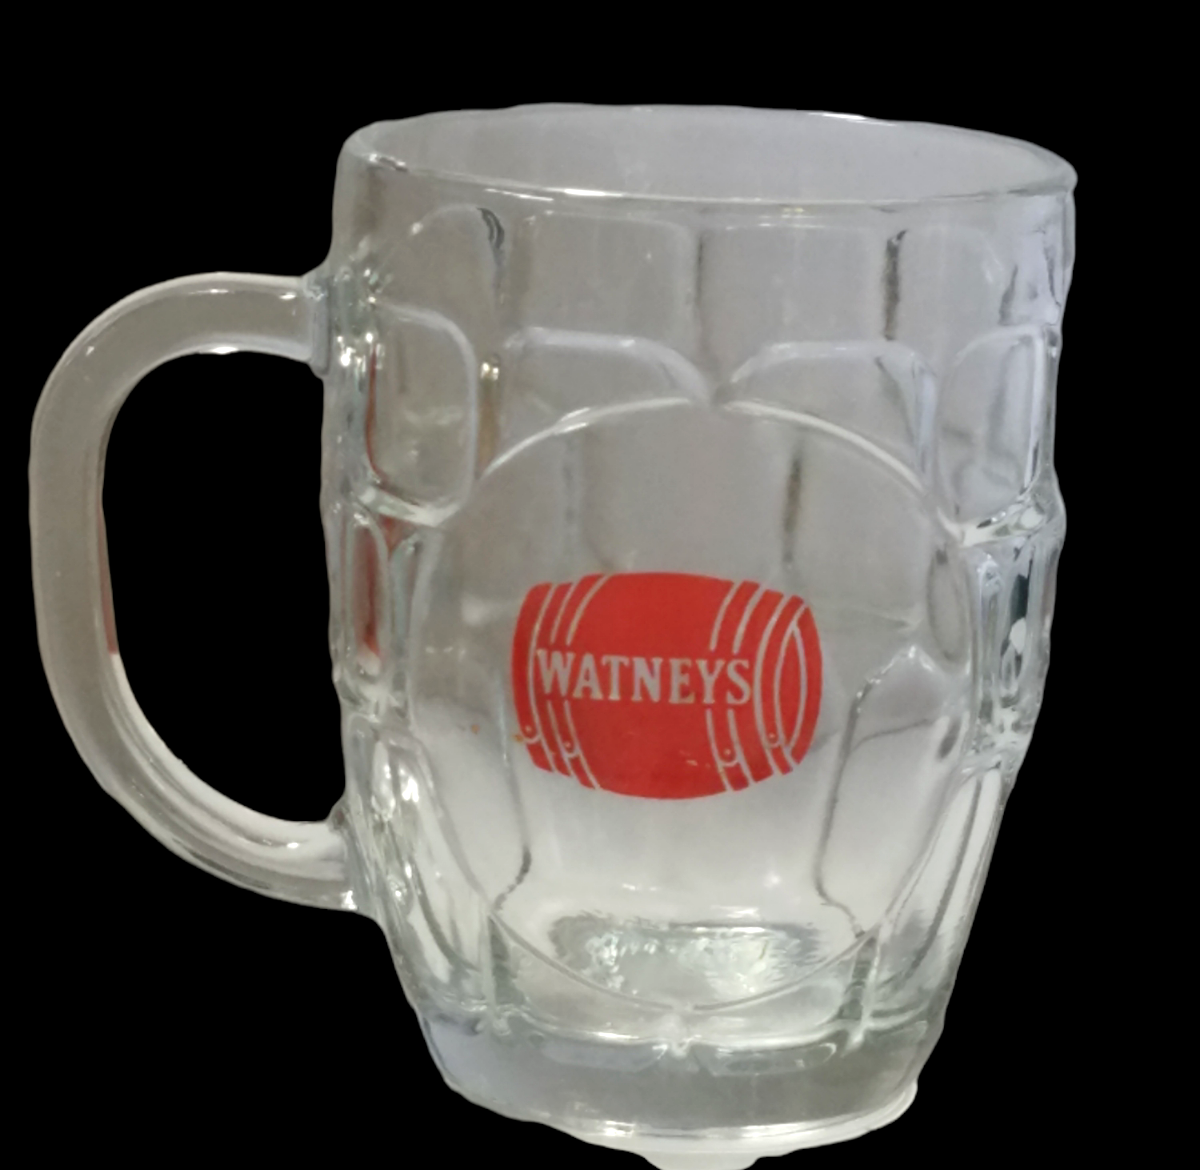 Watneys Beer Glass Mug Stein .4 Liter 5